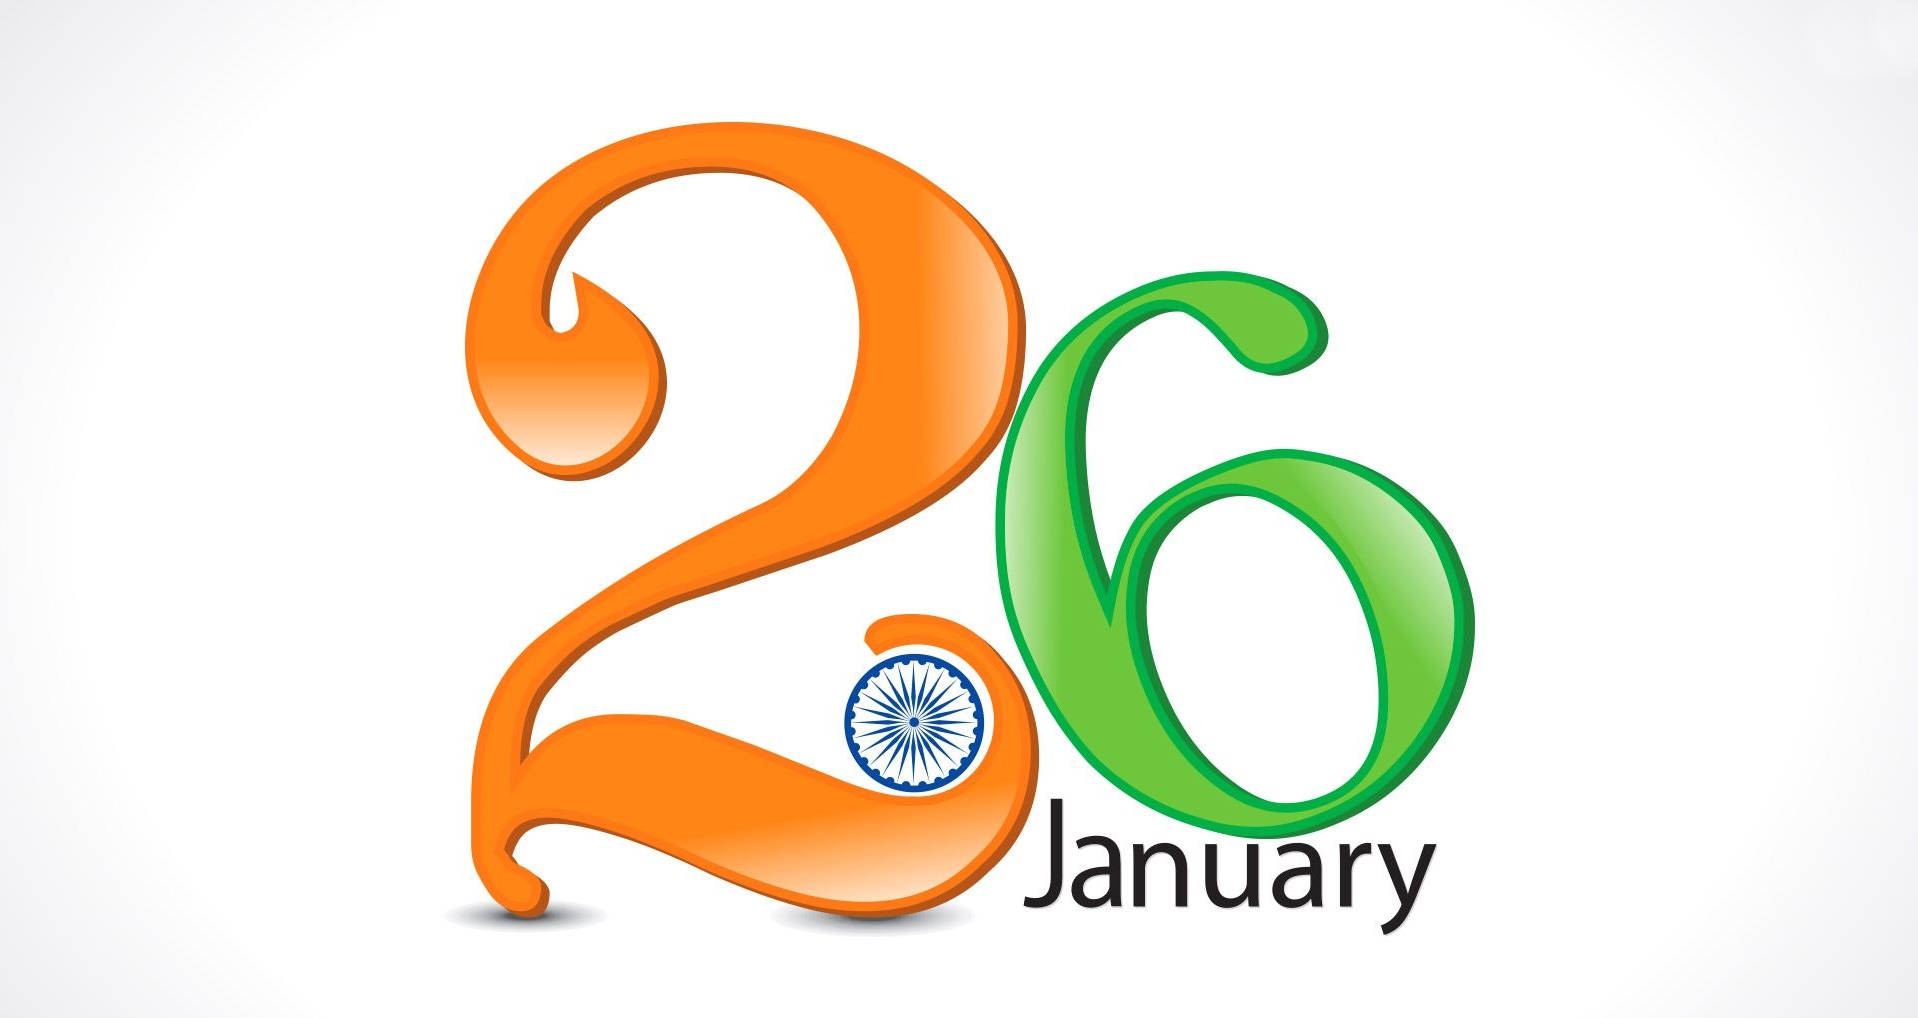 26 January Typography On White Background Background